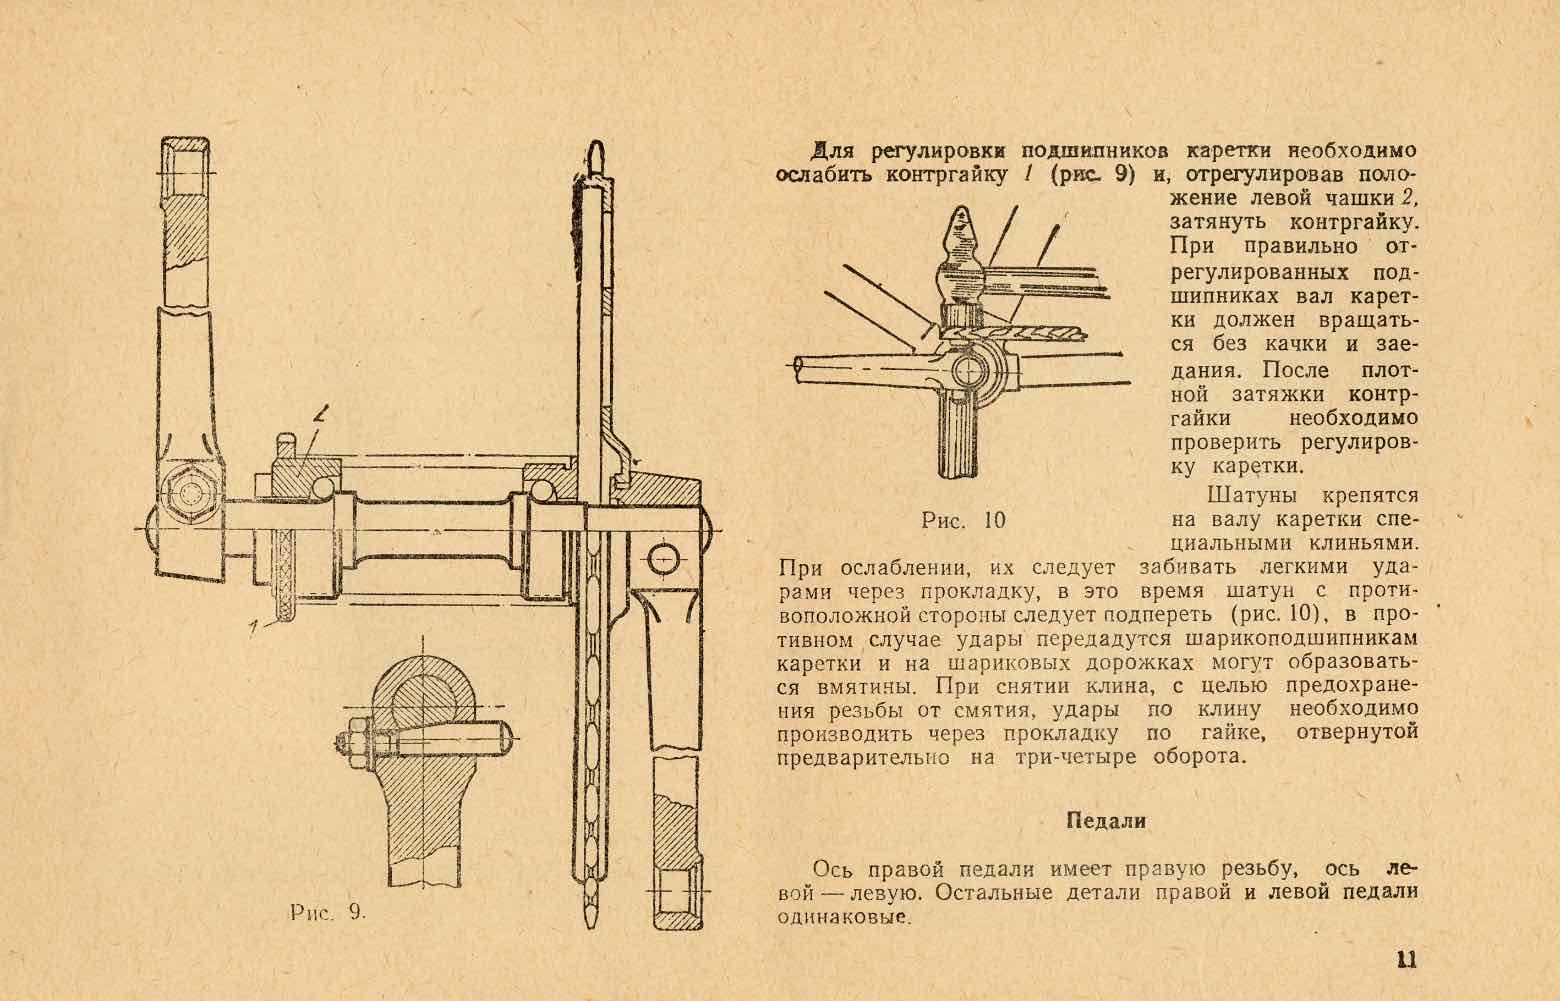 Kharkov - instructions for B130K & B134 - page 11 main image